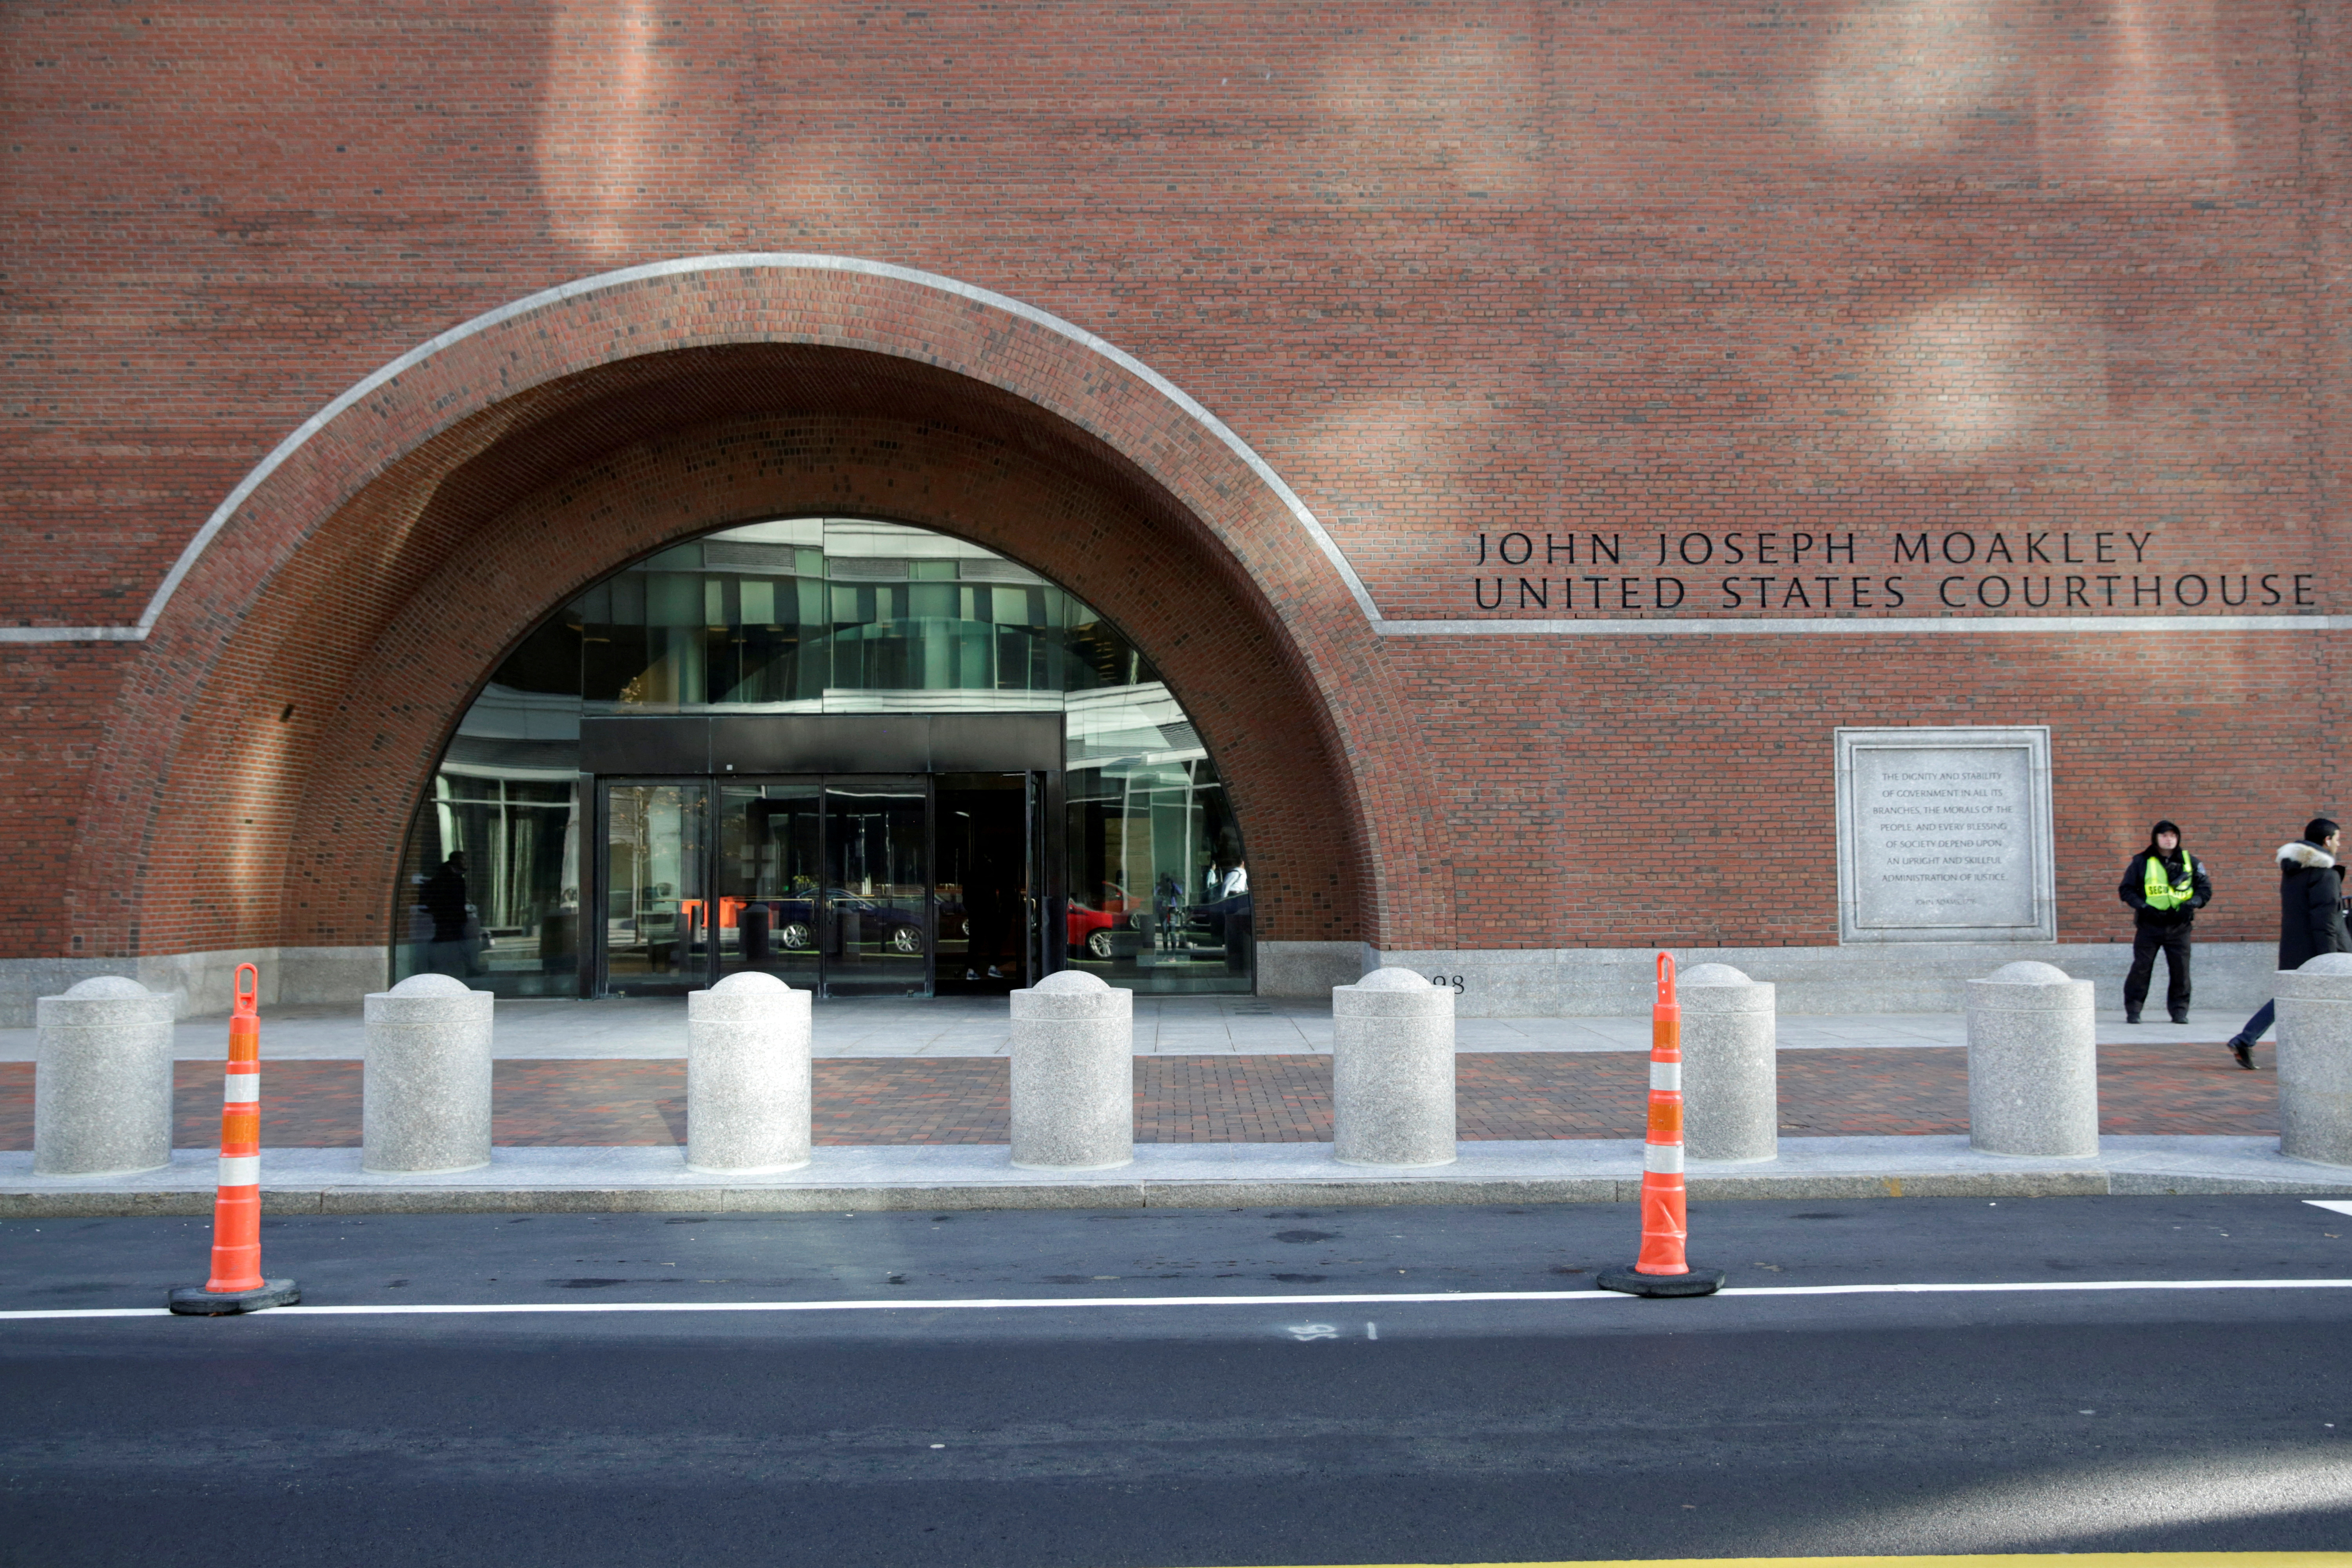 Exterior of the John Joseph Moakley United States Courthouse in Boston